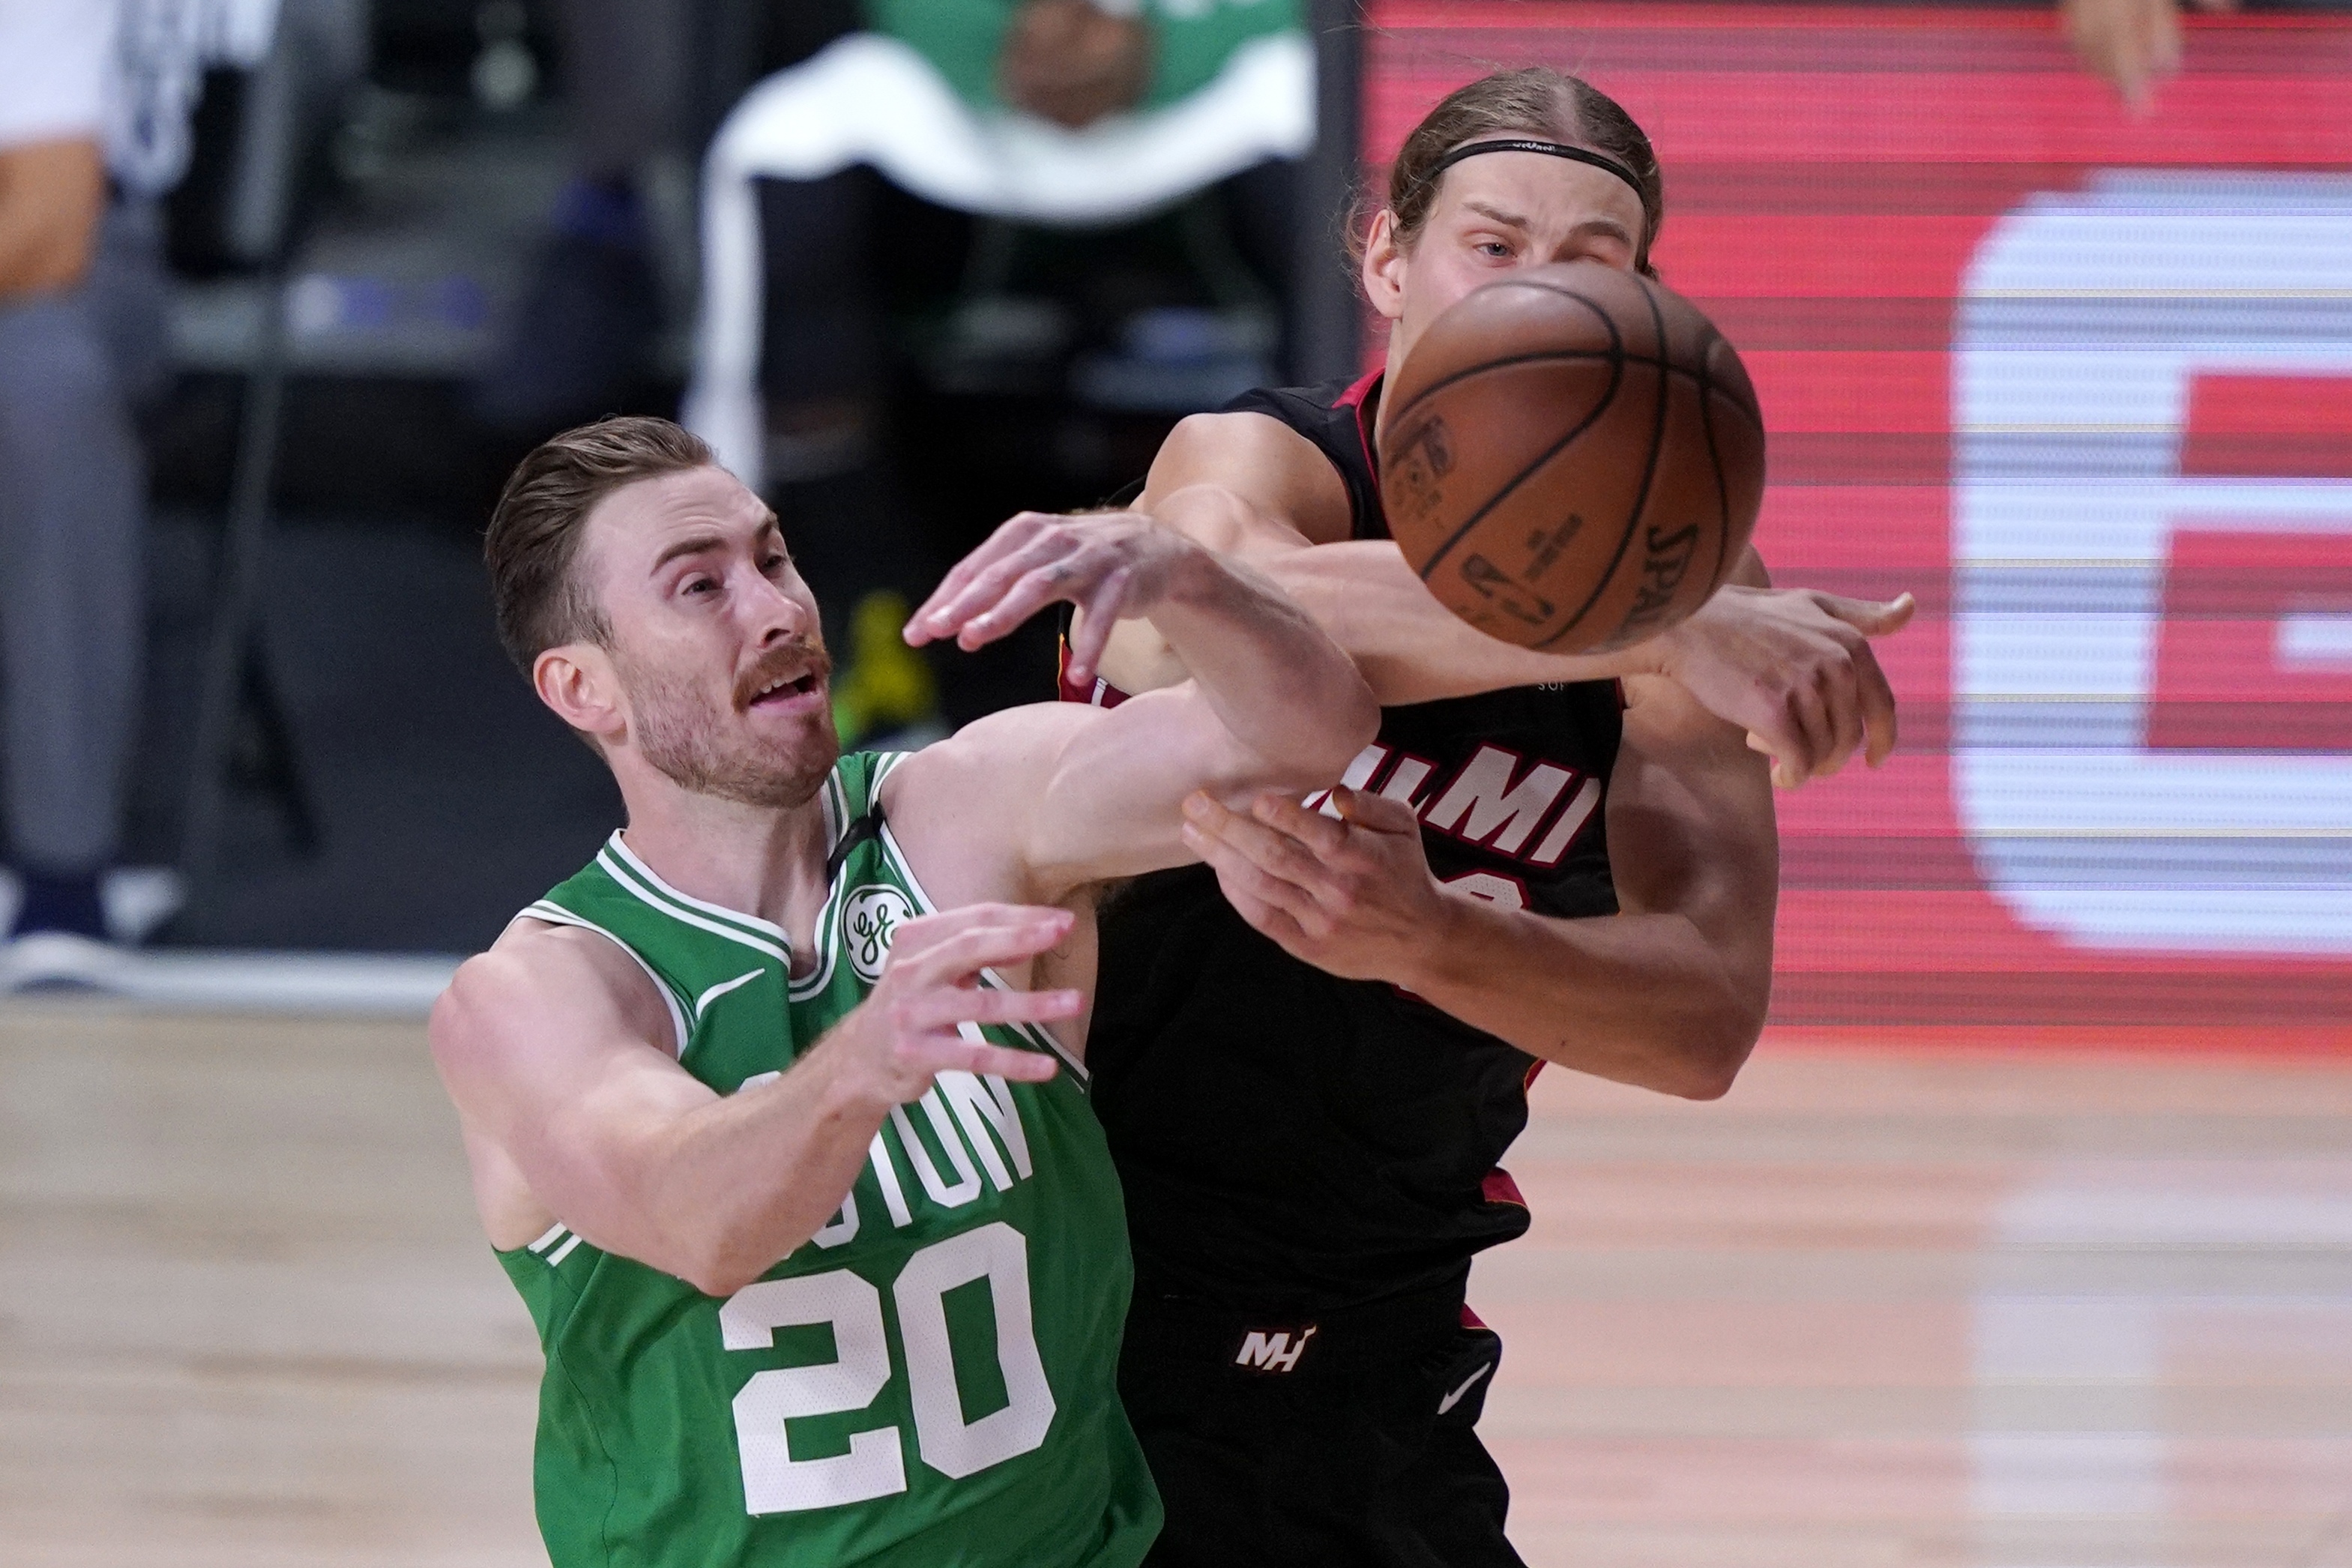 Boston Celtics vs. Miami Heat FREE LIVE STREAM (10/21/22): Watch NBA online